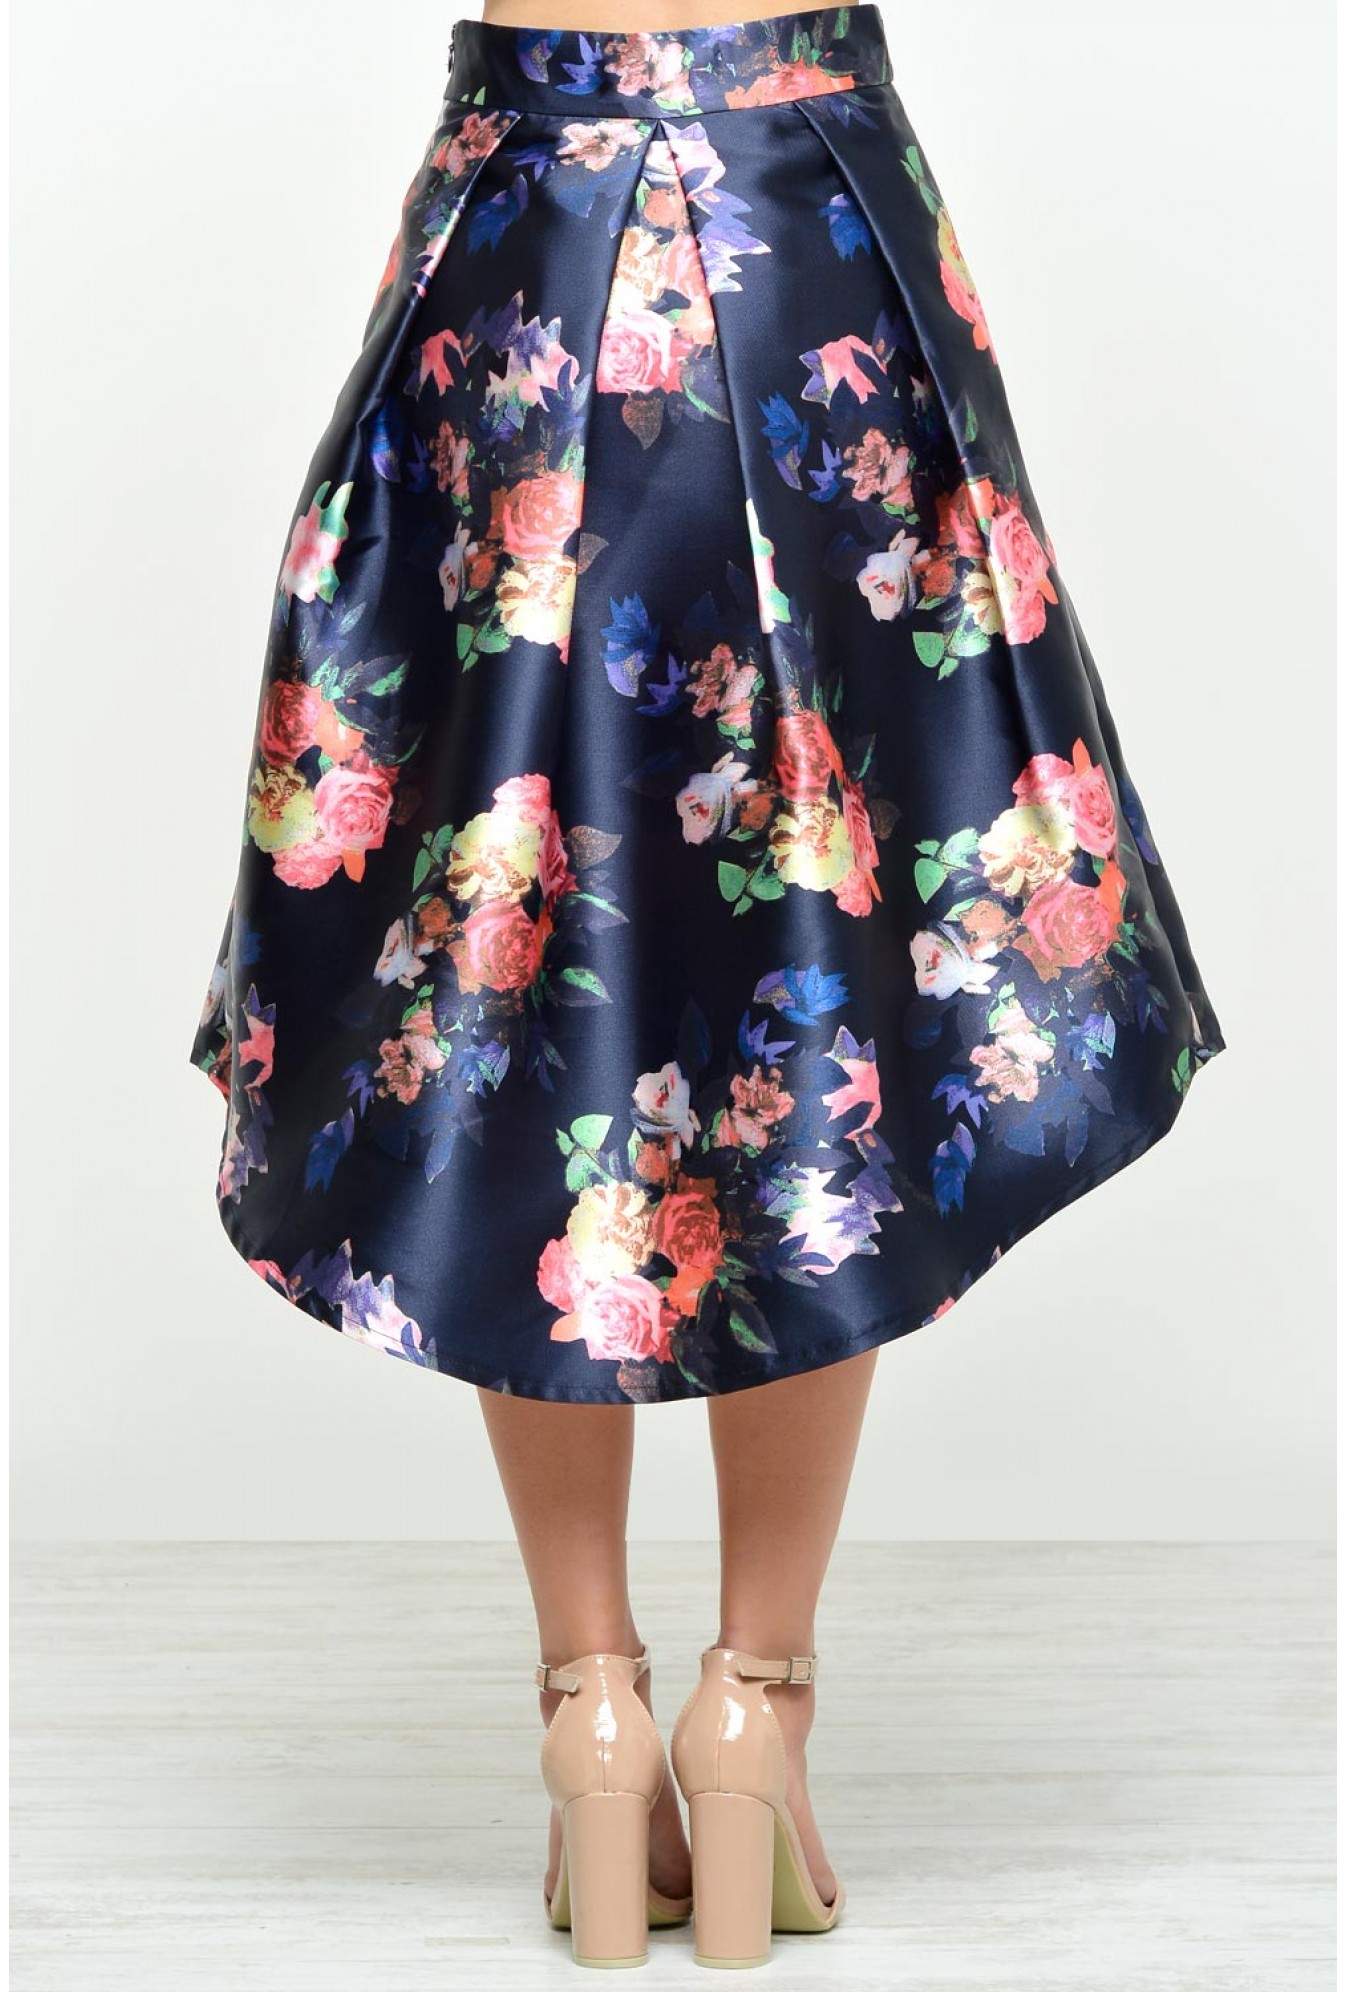 iCLOTHING Polyanna Floral Dipped Hem Skirt in Navy | iCLOTHING